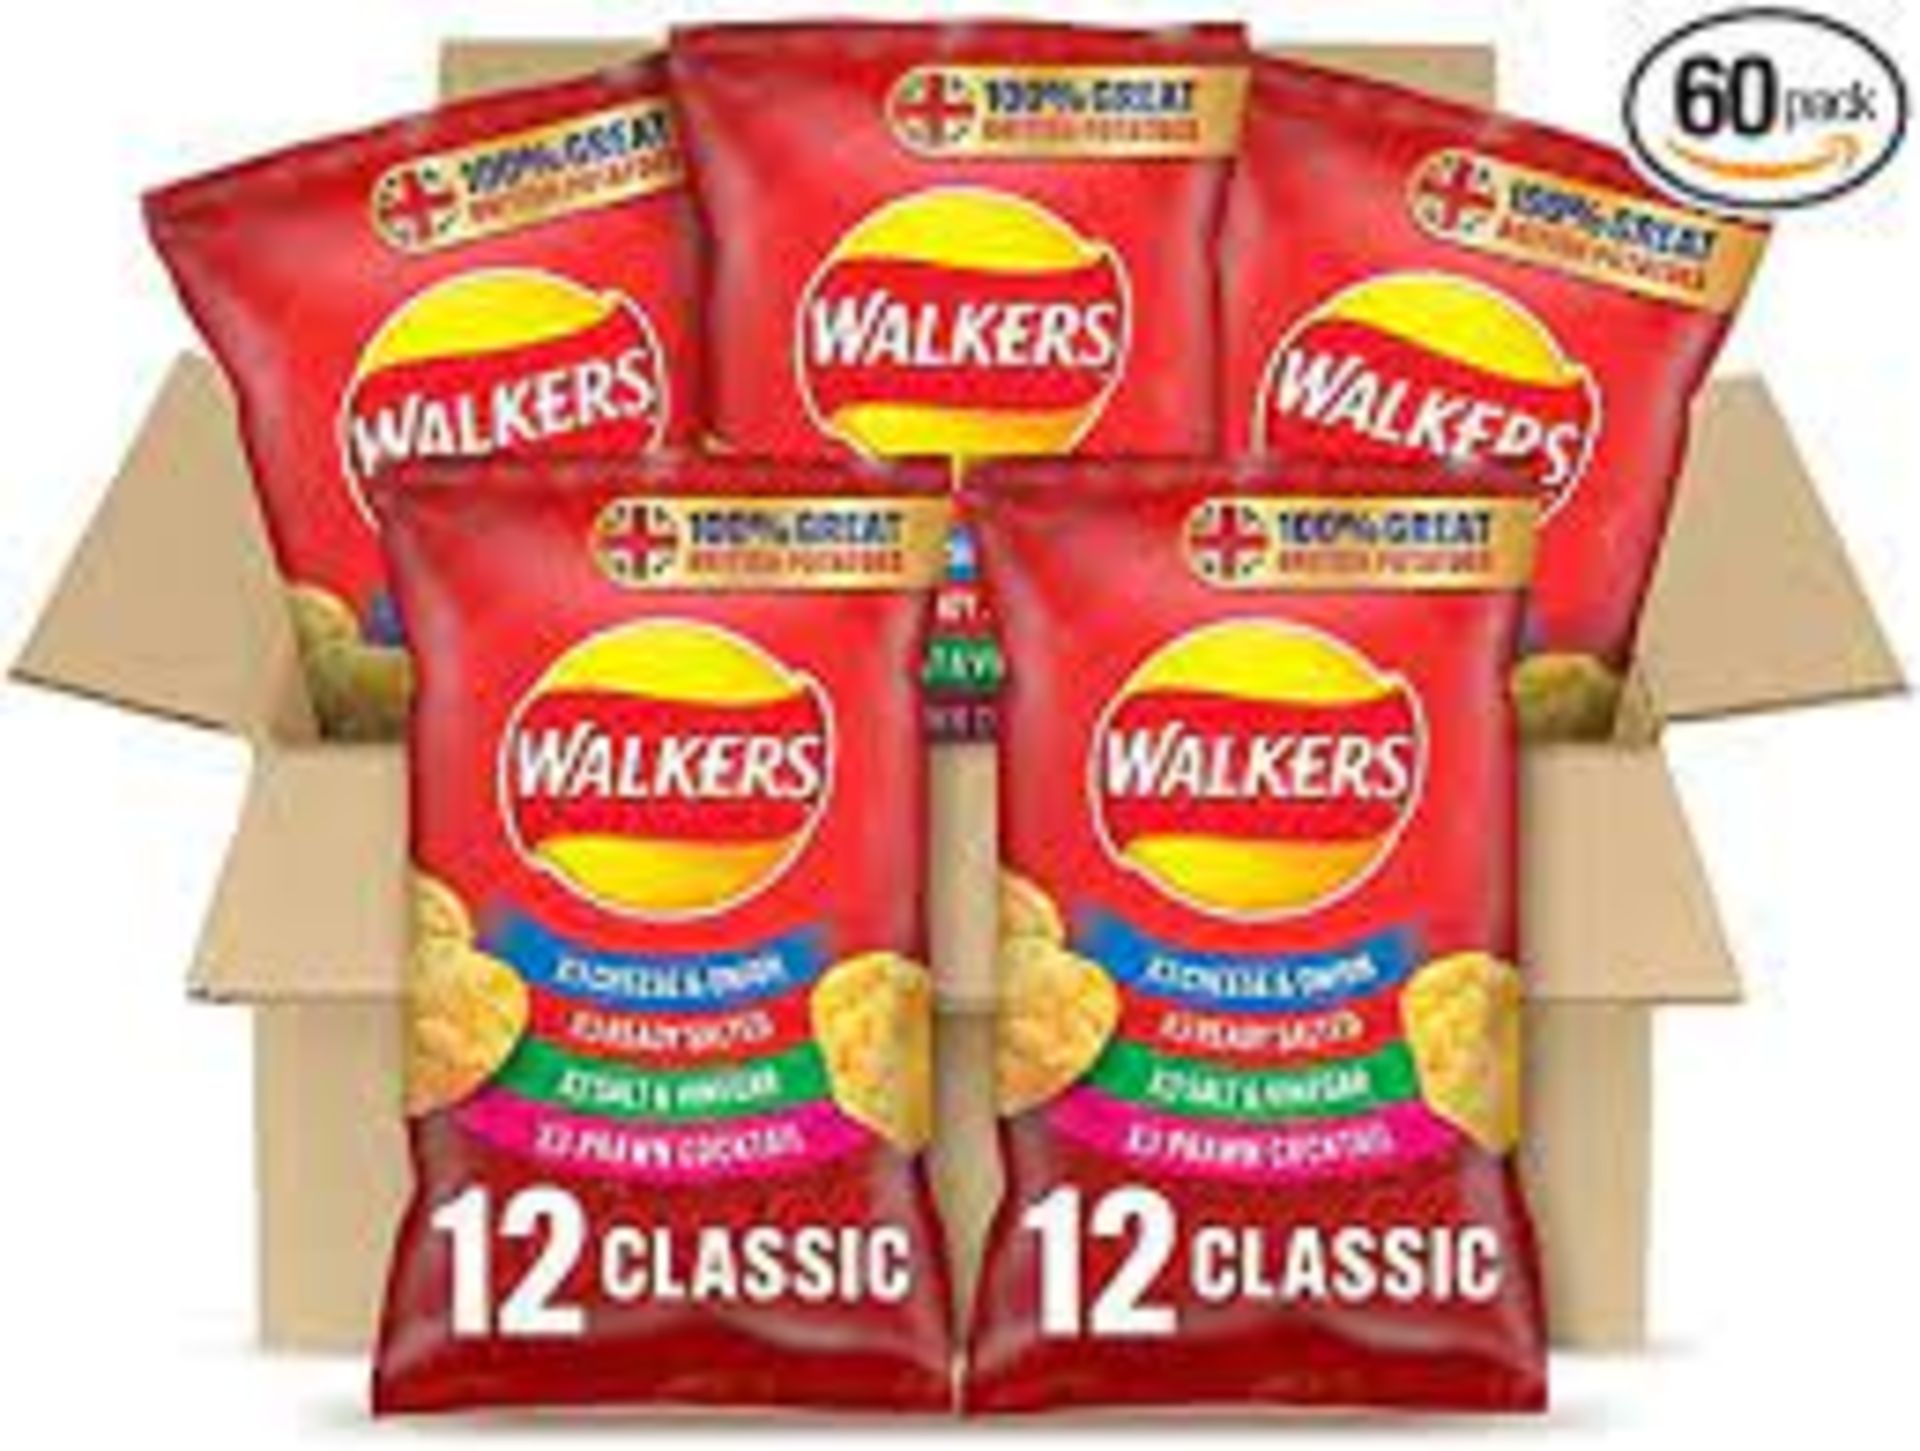 RRP £162 (Approx. Count 11) spSNJ21q517 9 X Walkers Classic Variety Crisps Box (60 Single Bags) 2